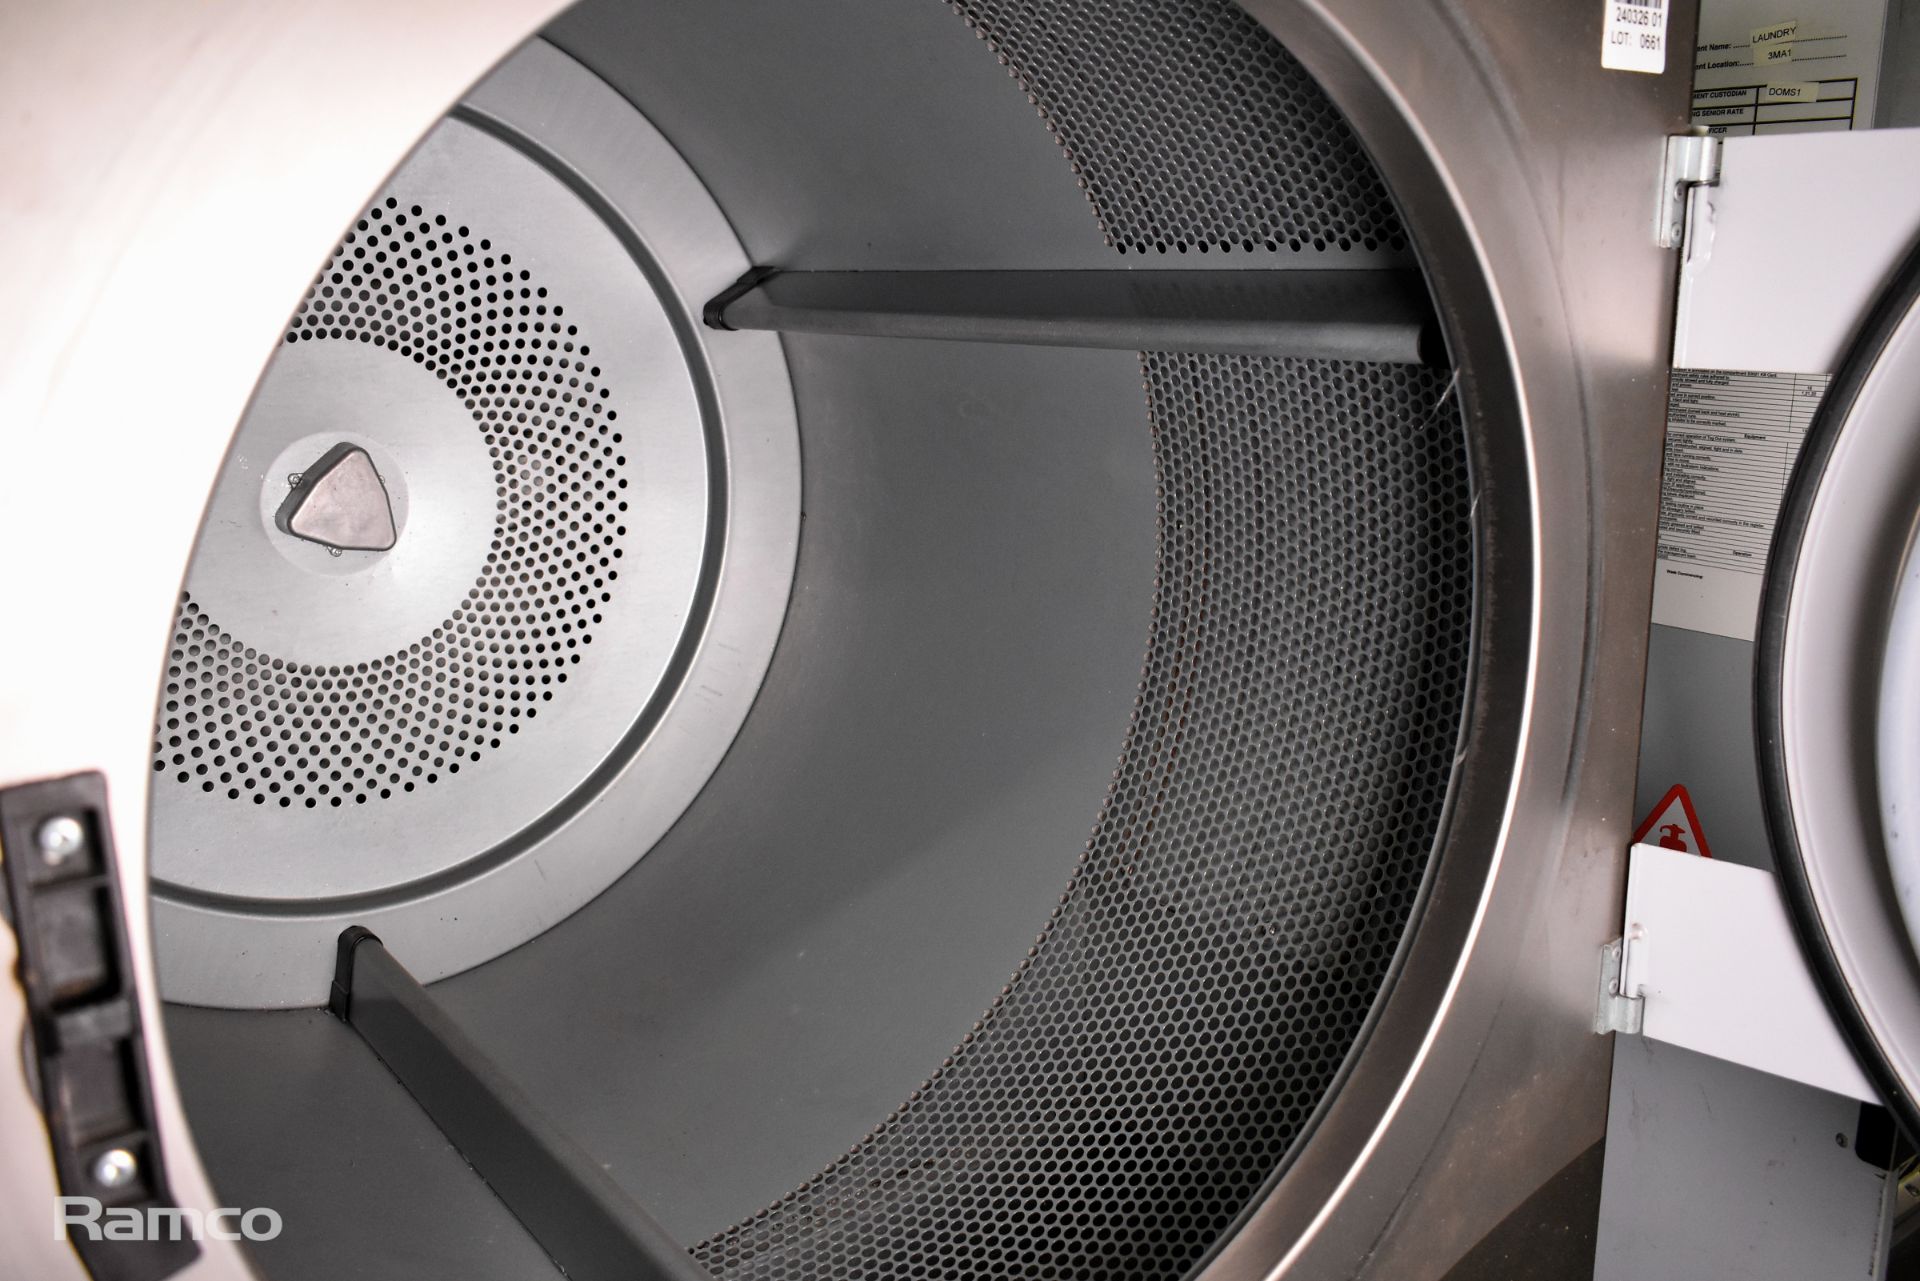 Electrolux T4350 professional tumble dryer - 349 litre drum volume - 3 phase 440V 60Hz - Image 4 of 7